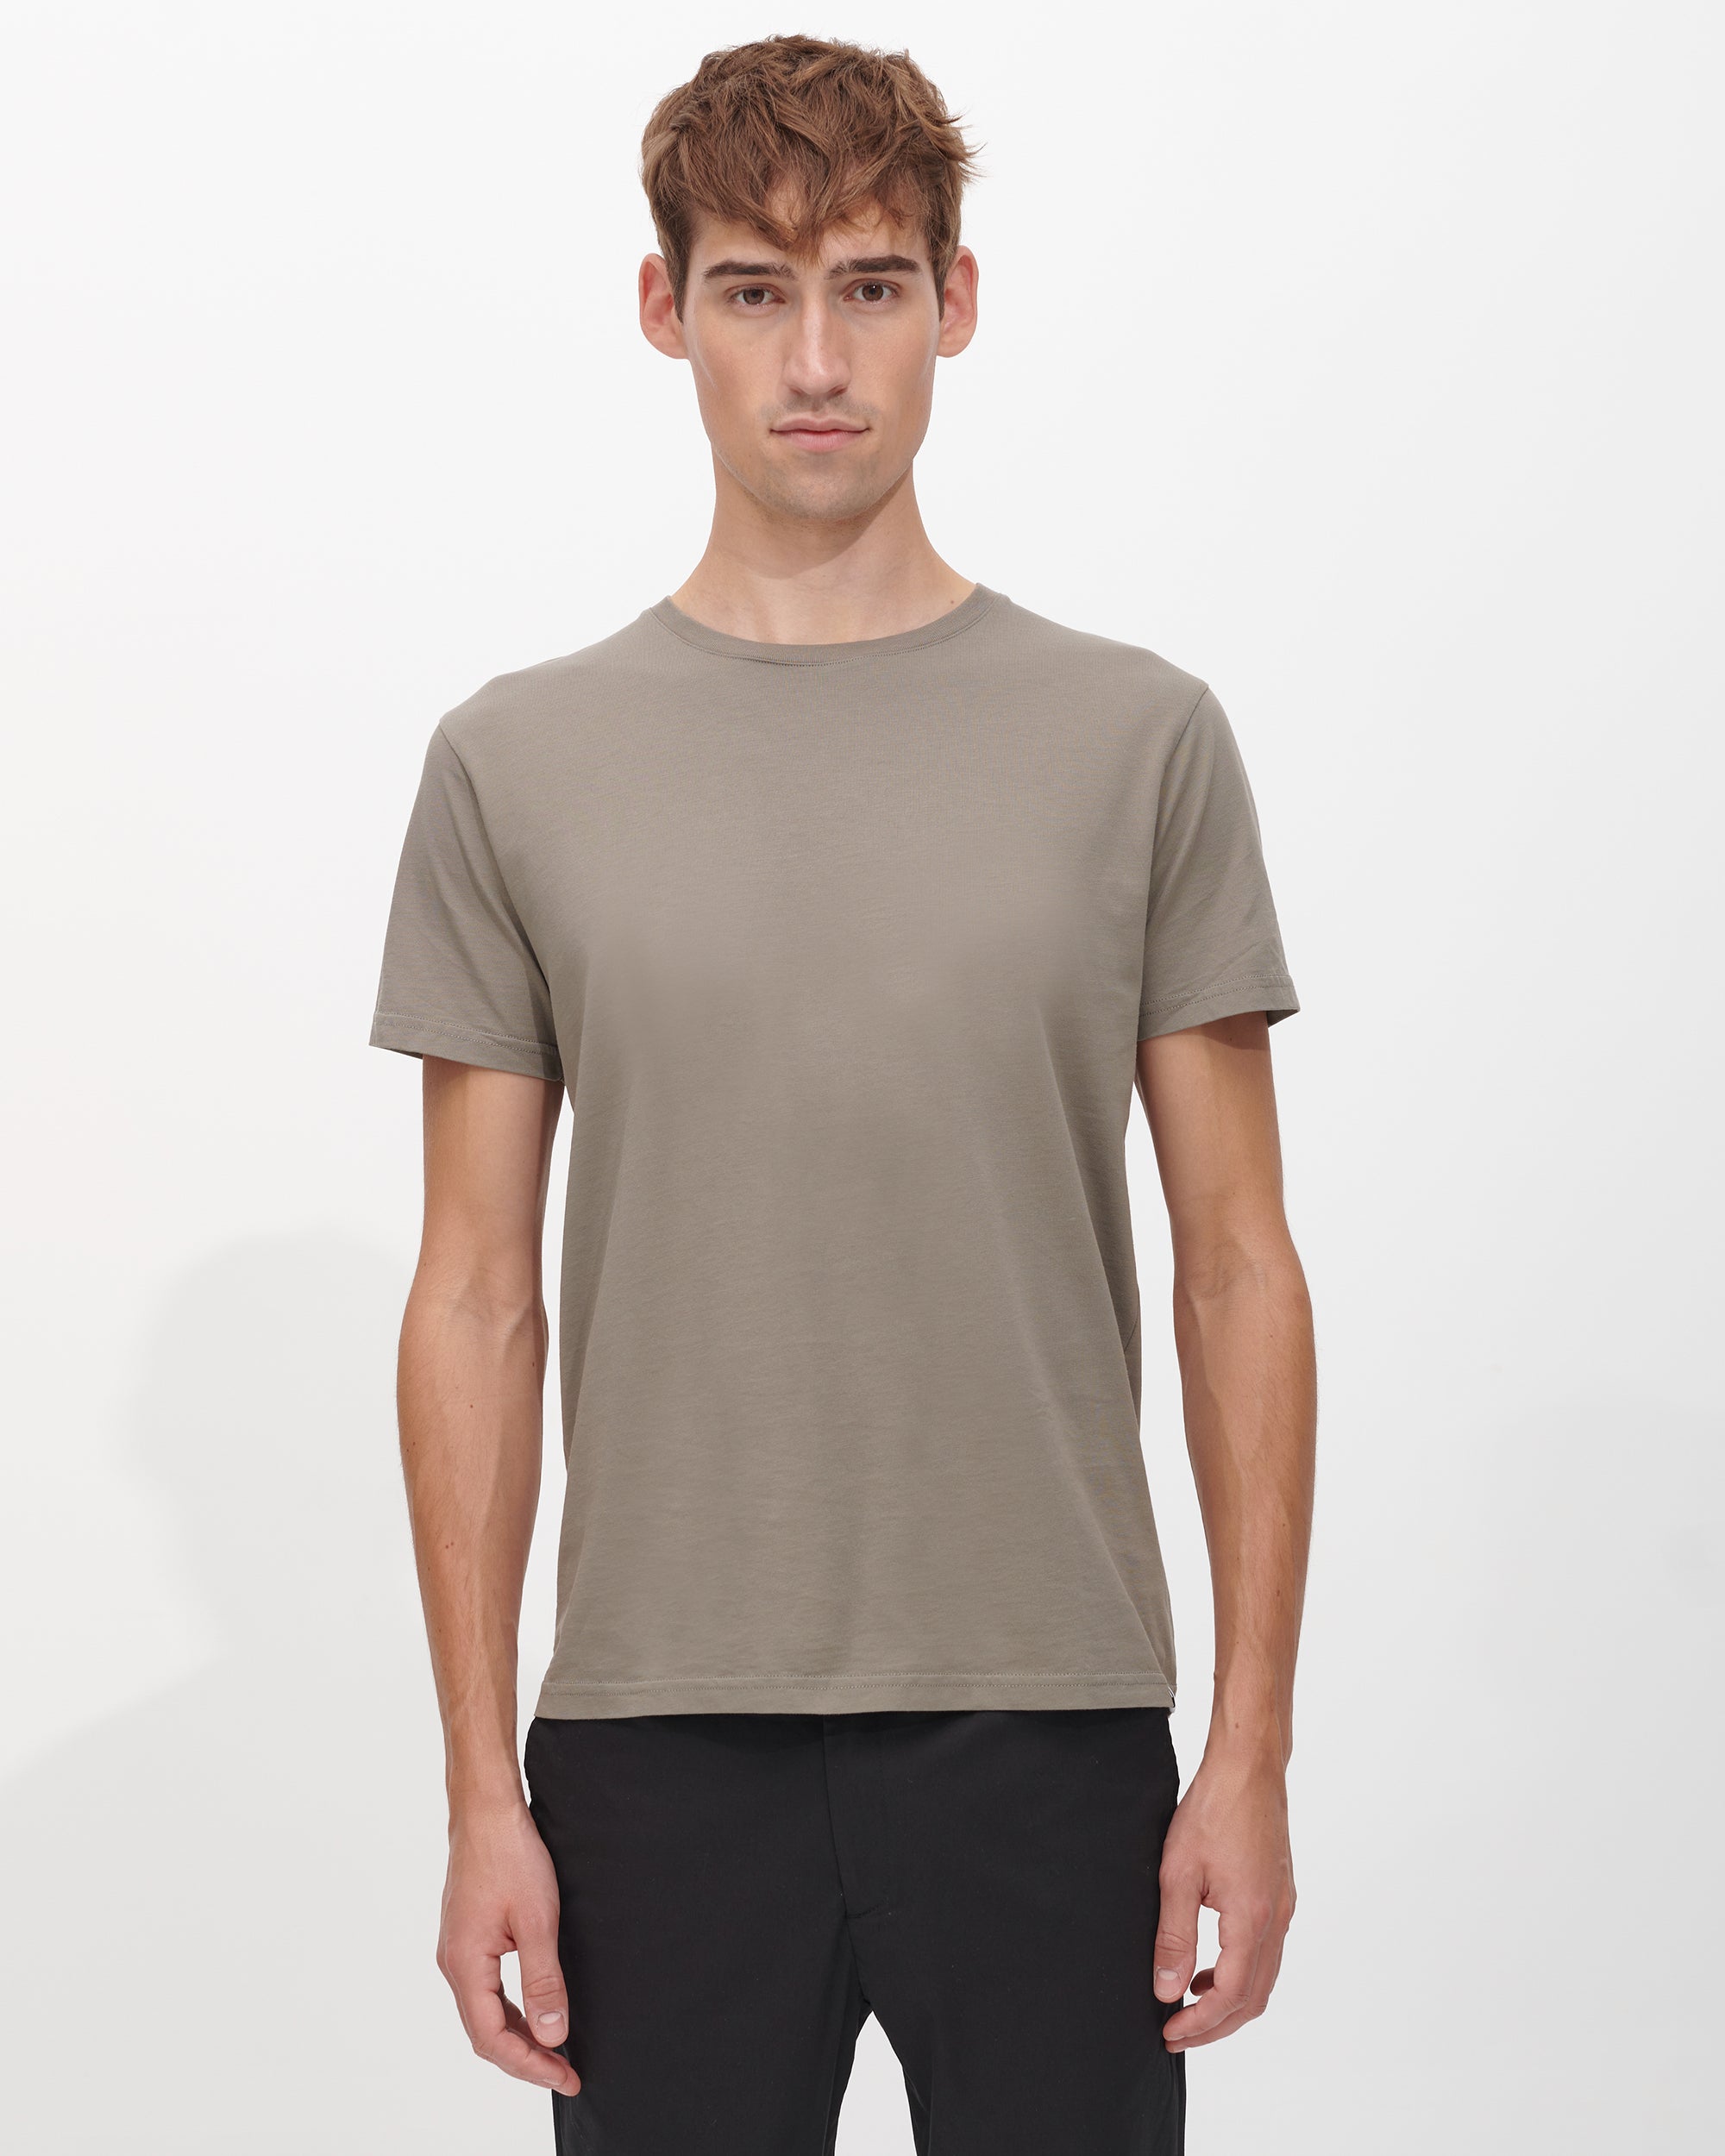 The Perfect Dust Grey T-Shirt for Men | Premium 185GSM Cotton